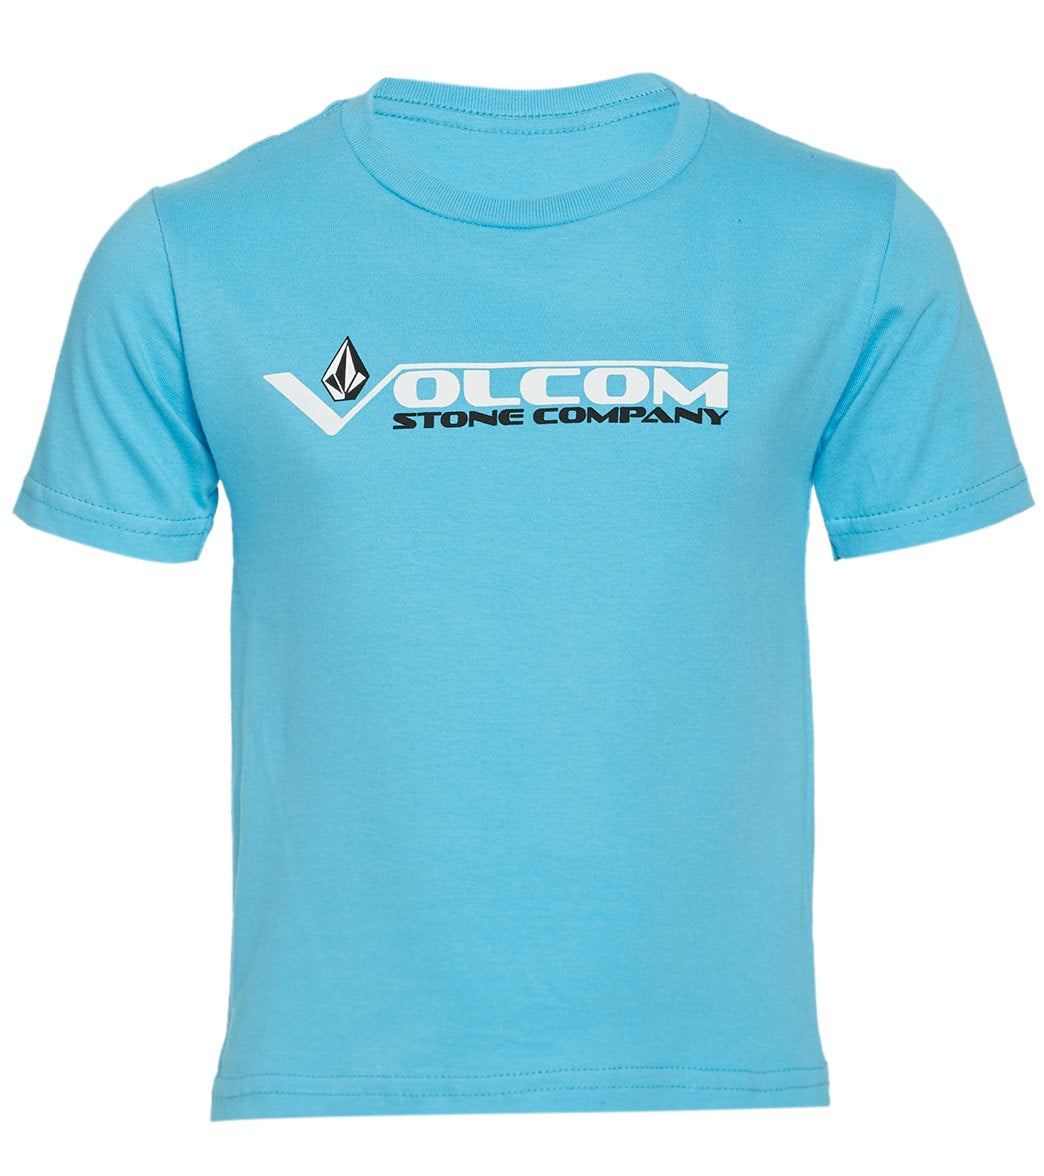 Volcom Boys' Vee Stone Short Sleeve Shirt - Aqua 2T Cotton - Swimoutlet.com